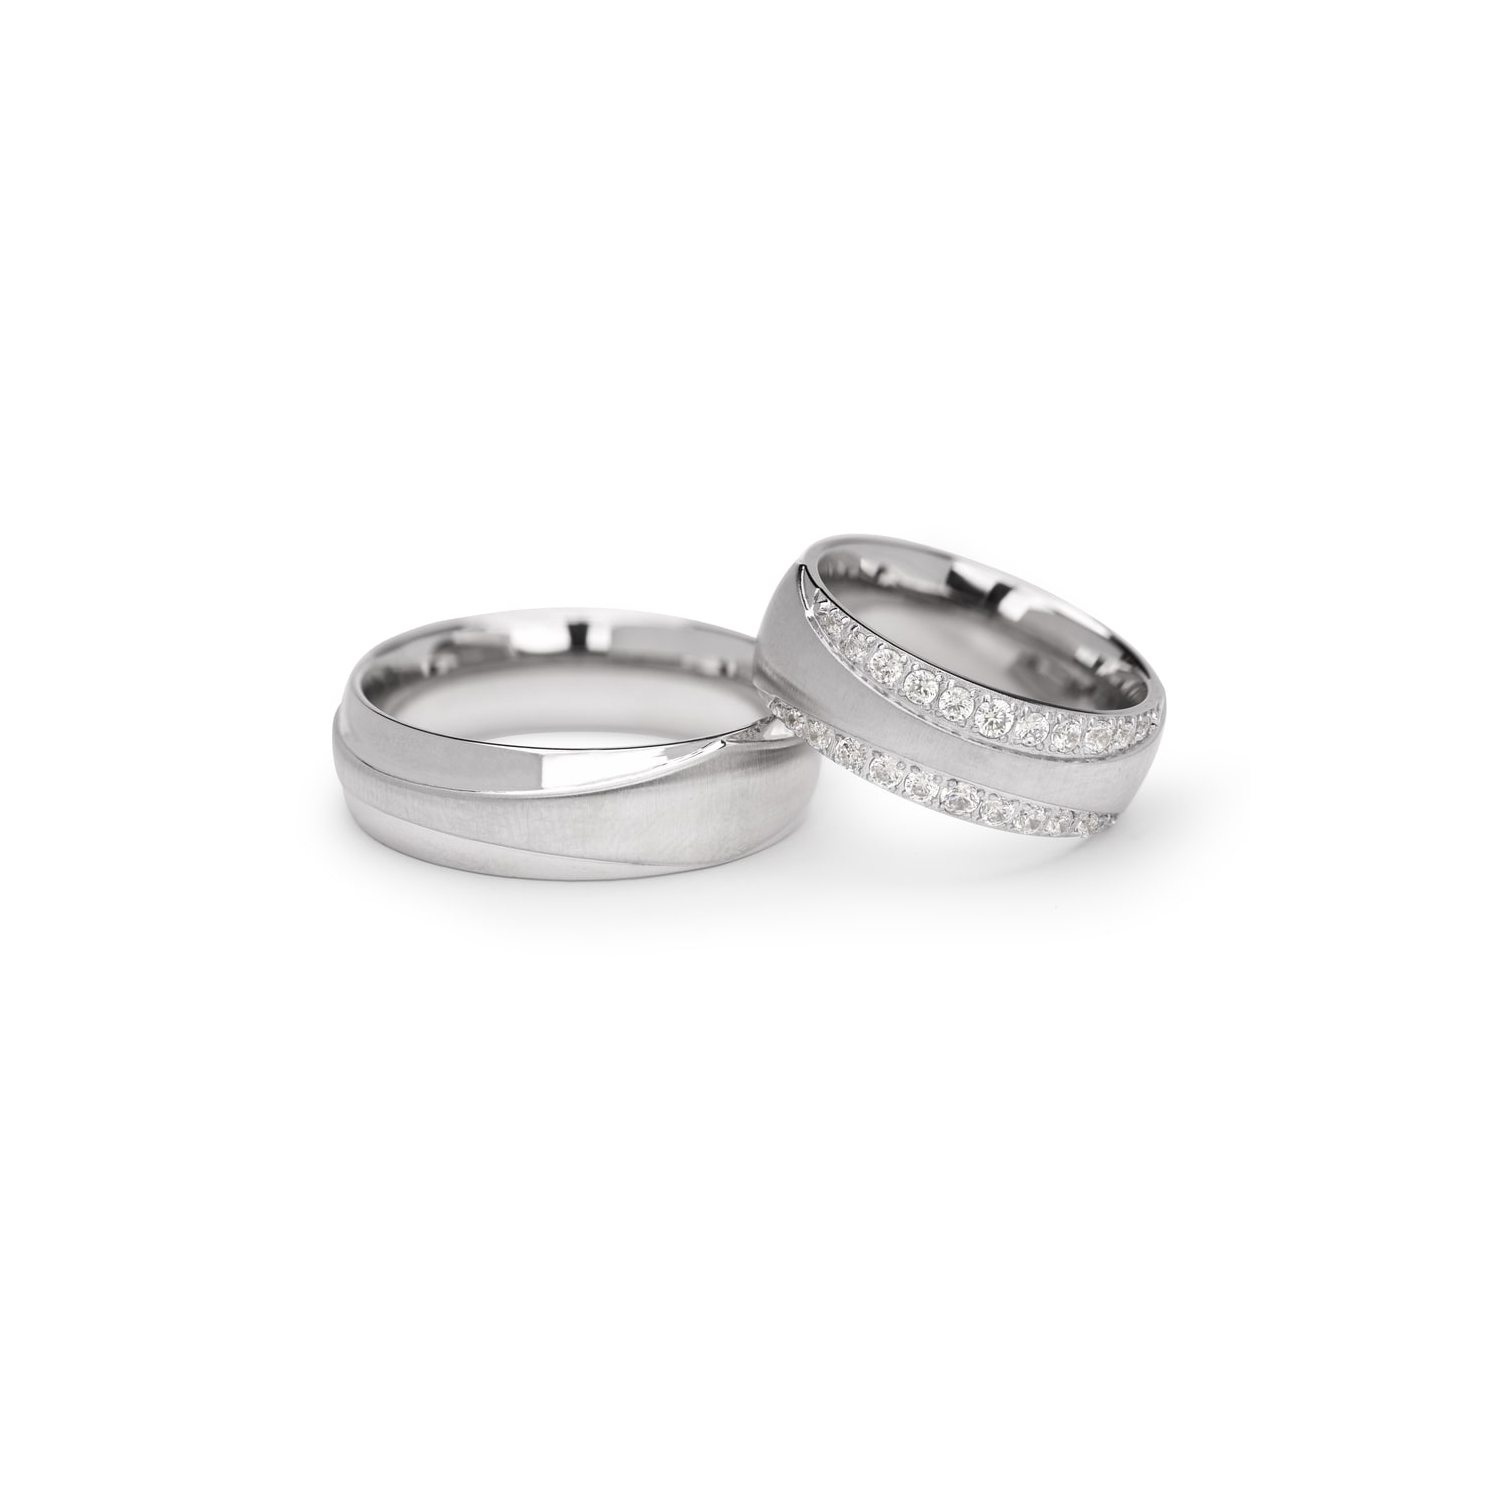 Golden wedding rings with diamonds "VKA 137"